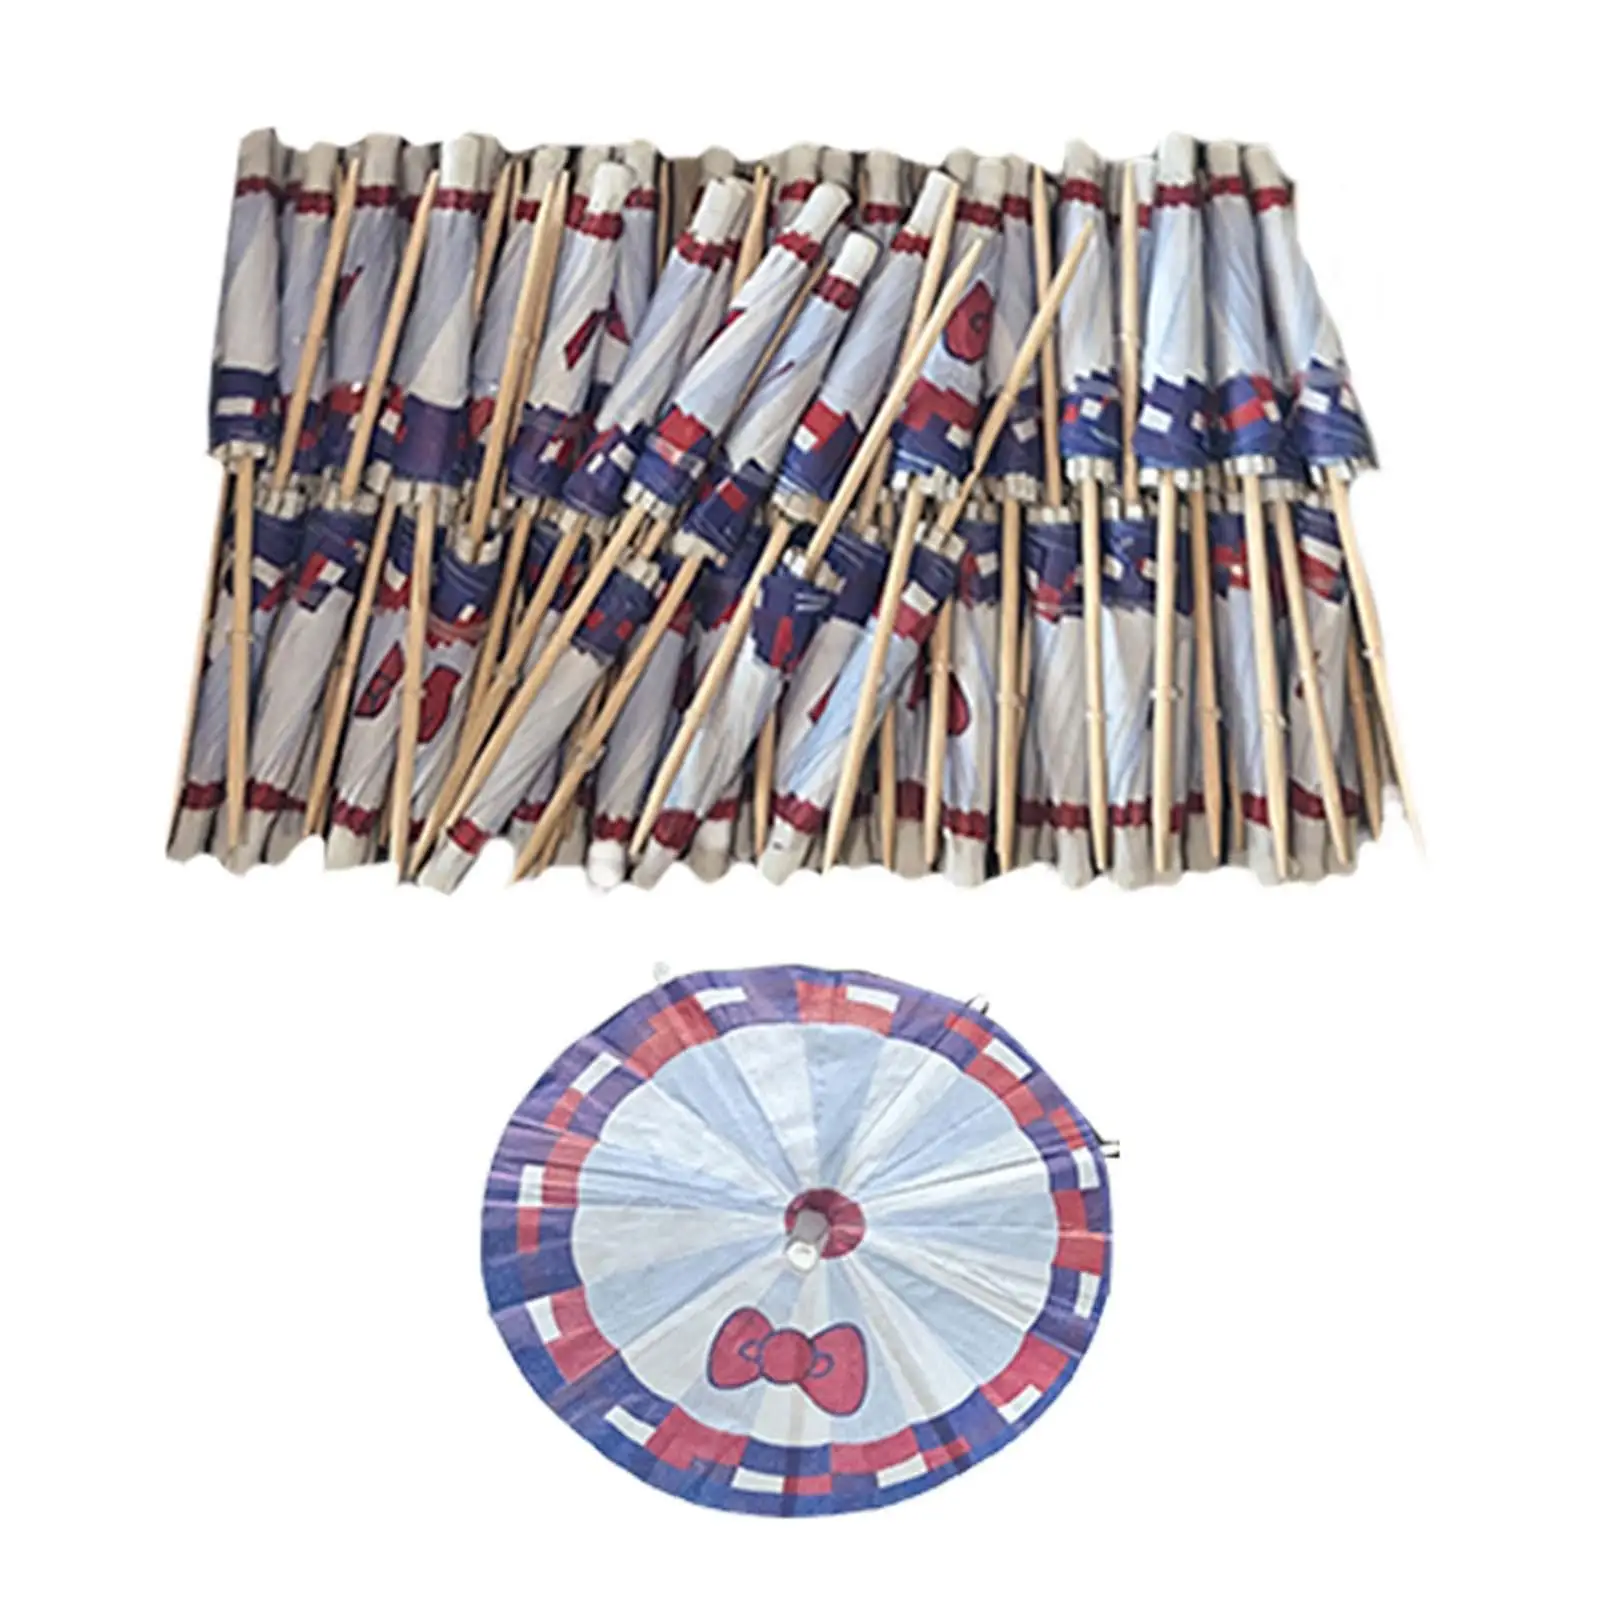 100 Pieces Cocktail Umbrellas Picks Handmade Party Decoration Drink Umbrella Toothpicks for Party Cafe Restaurant Wedding Cake